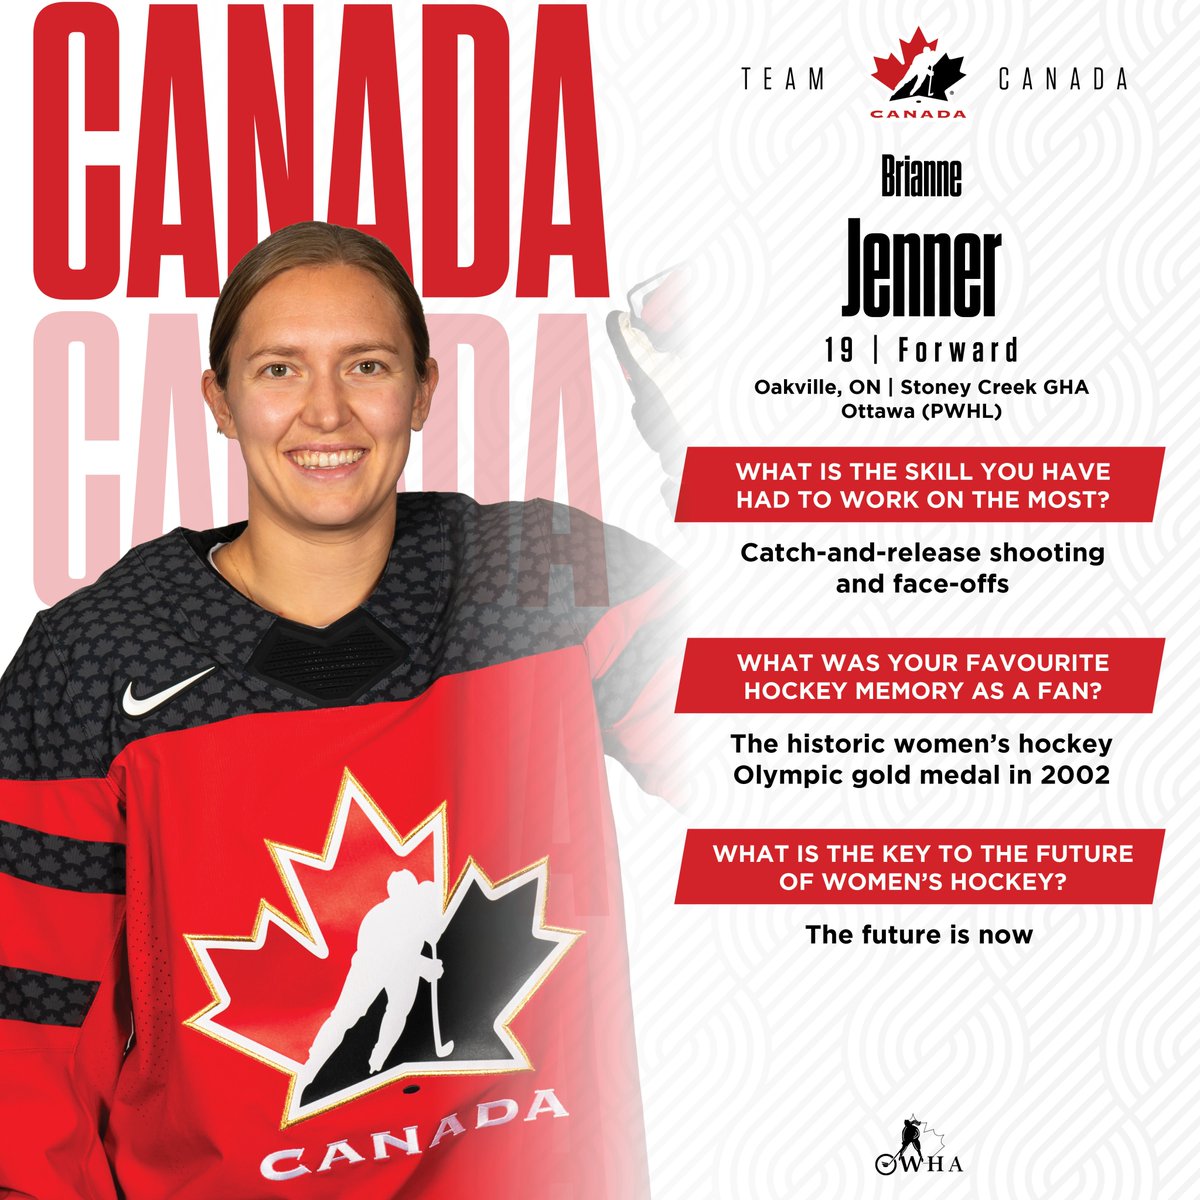 Get to know Team Canada! 🇨🇦 Faites connaissance avec les joueuses d’Équipe Canada! 🇨🇦 🍁 Julia Gosling 🍁 @NicoleGosling2 🍁 @emmamaltais17 🍁 @briannejenner #WomensWorlds | #MondialFéminin